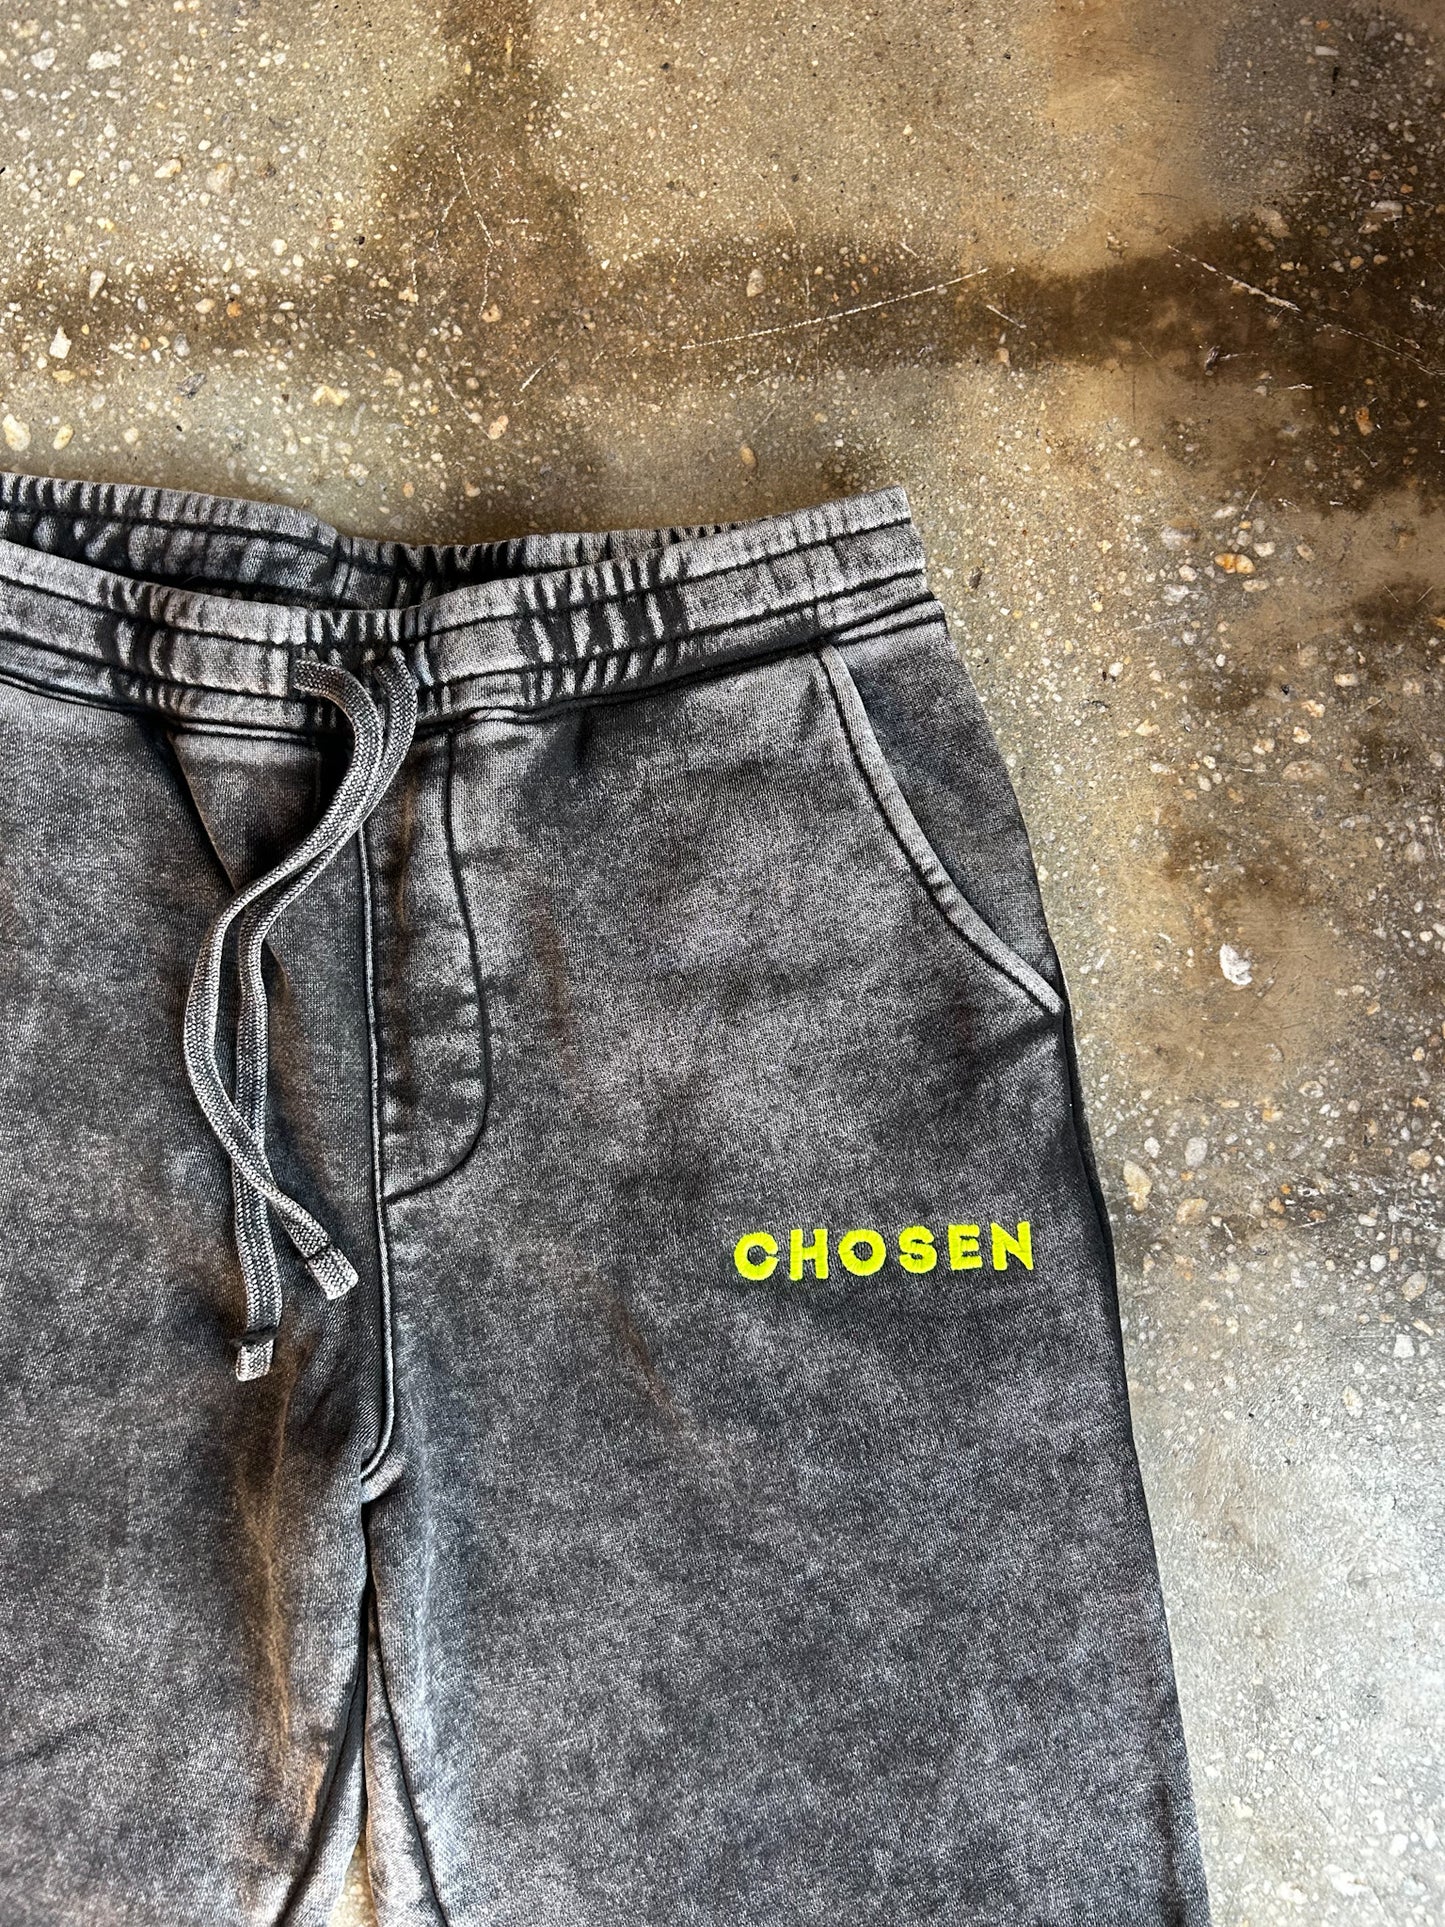 Chosen Embroidered Adult/Unisex Sweatpants